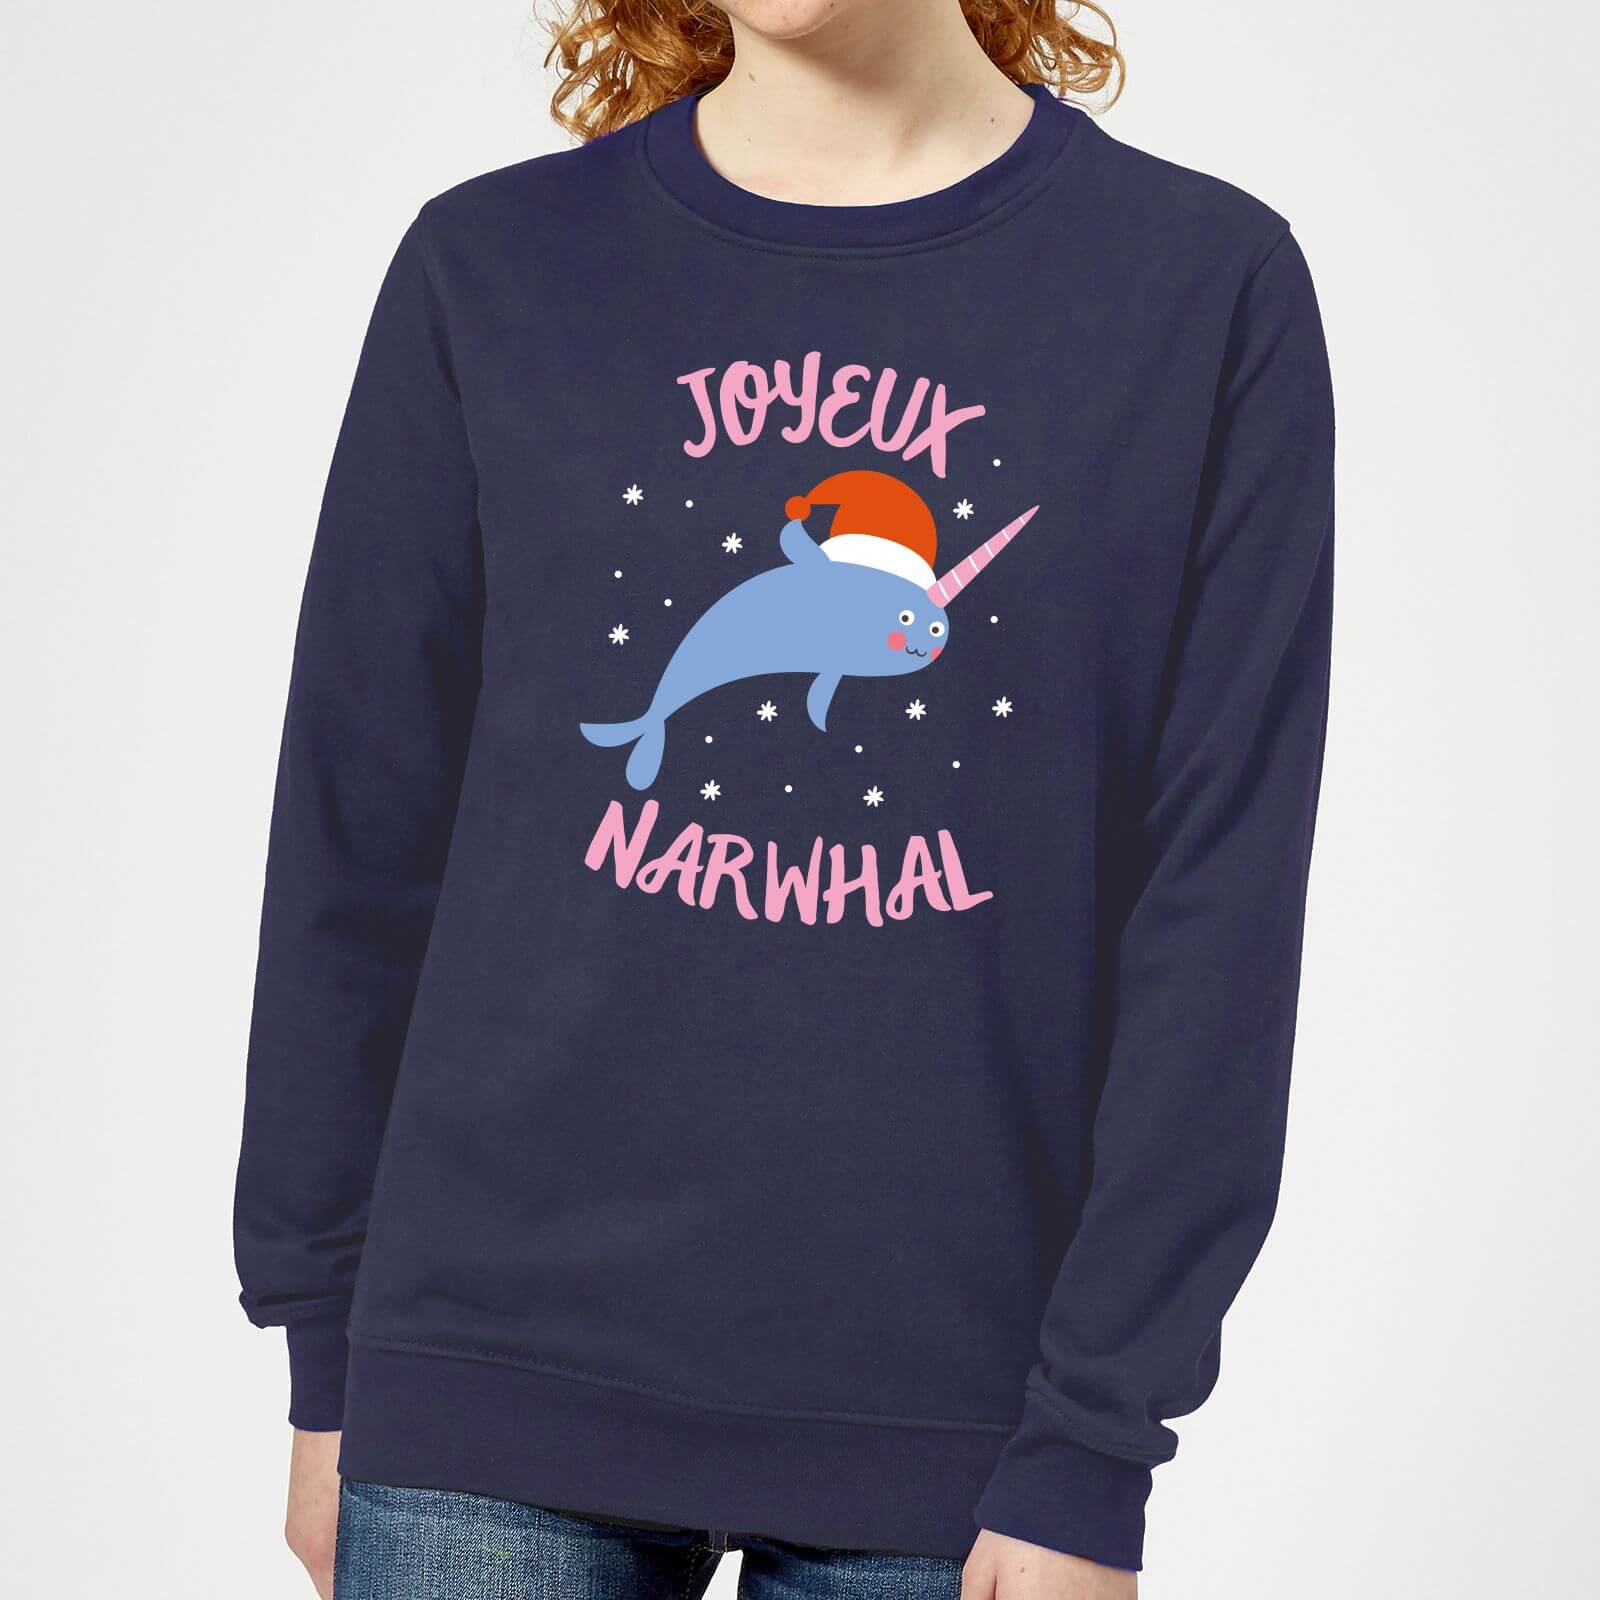 Joyeux Narwhal Women's Christmas Sweatshirt - Navy - XS